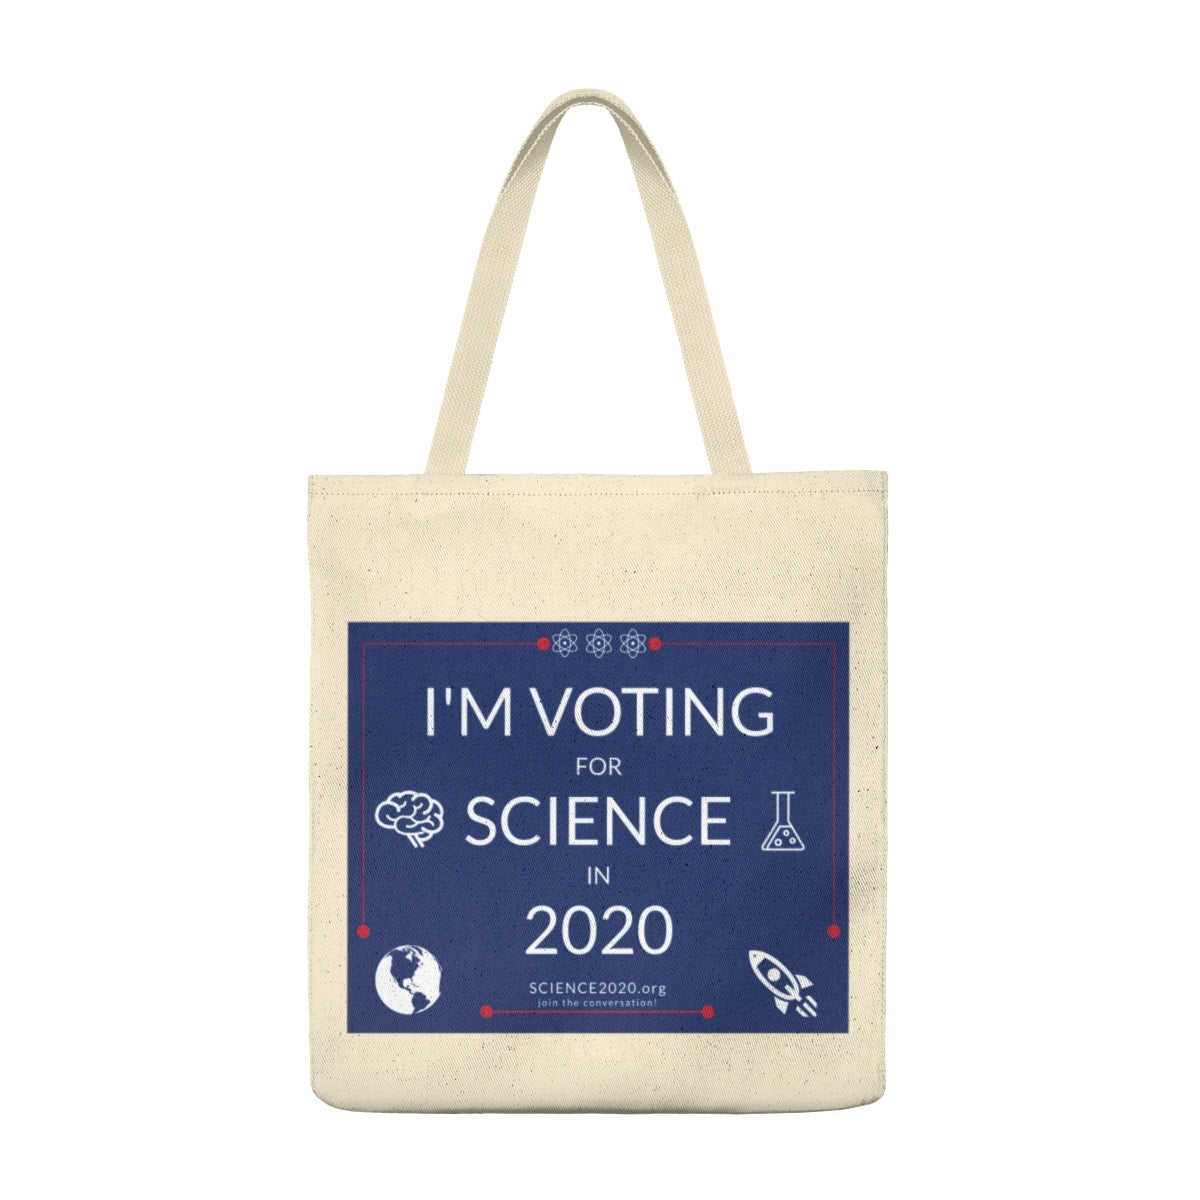 GLG - I'm voting for science in 2020 tote bag